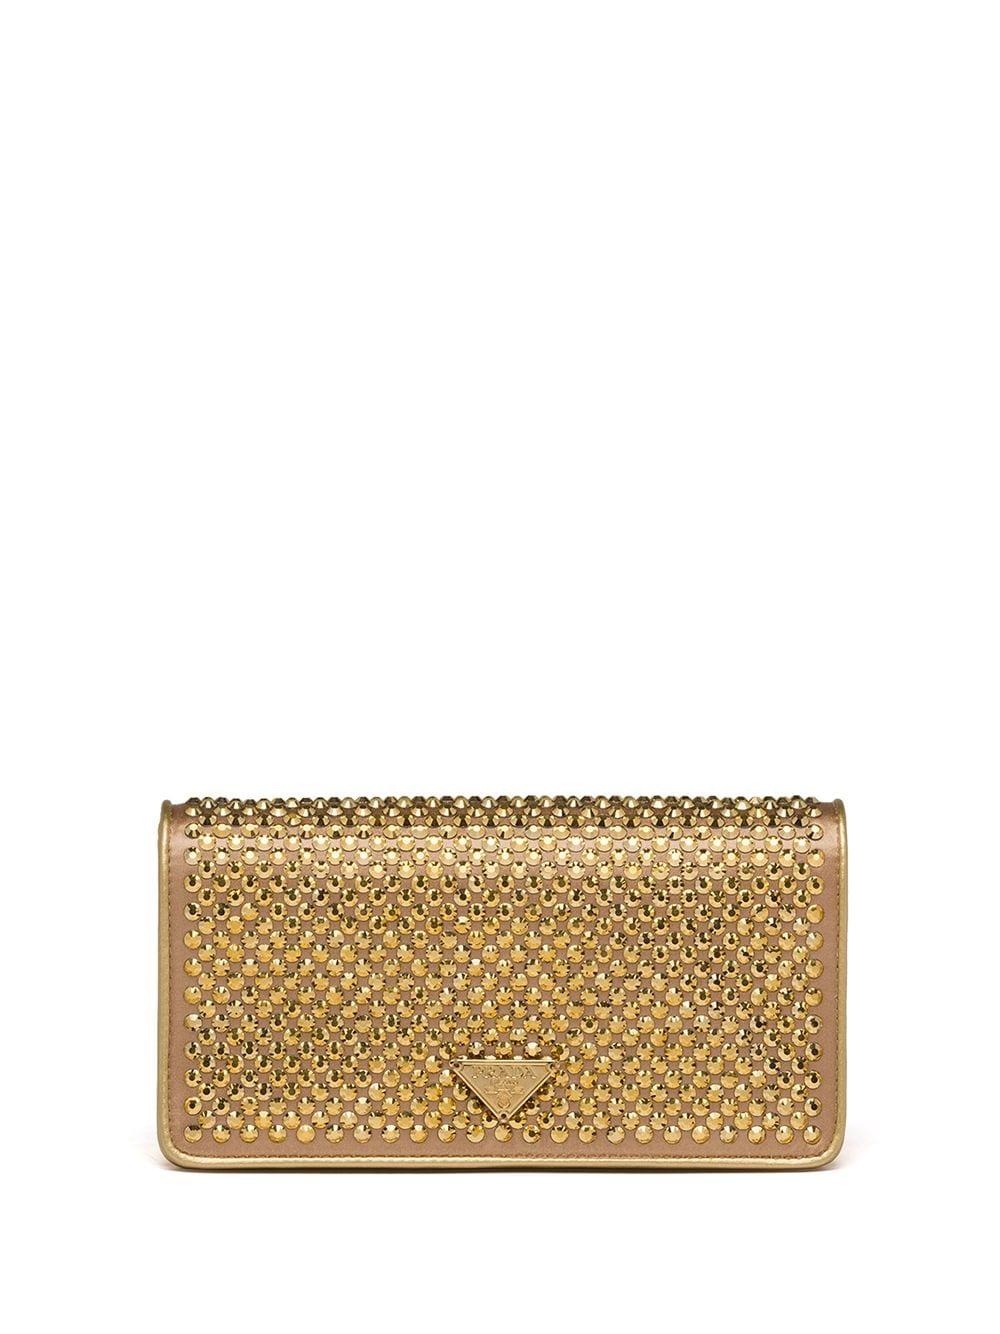 Prada Leather Crystal-embellished Mini Bag in Gold (Metallic) | Lyst